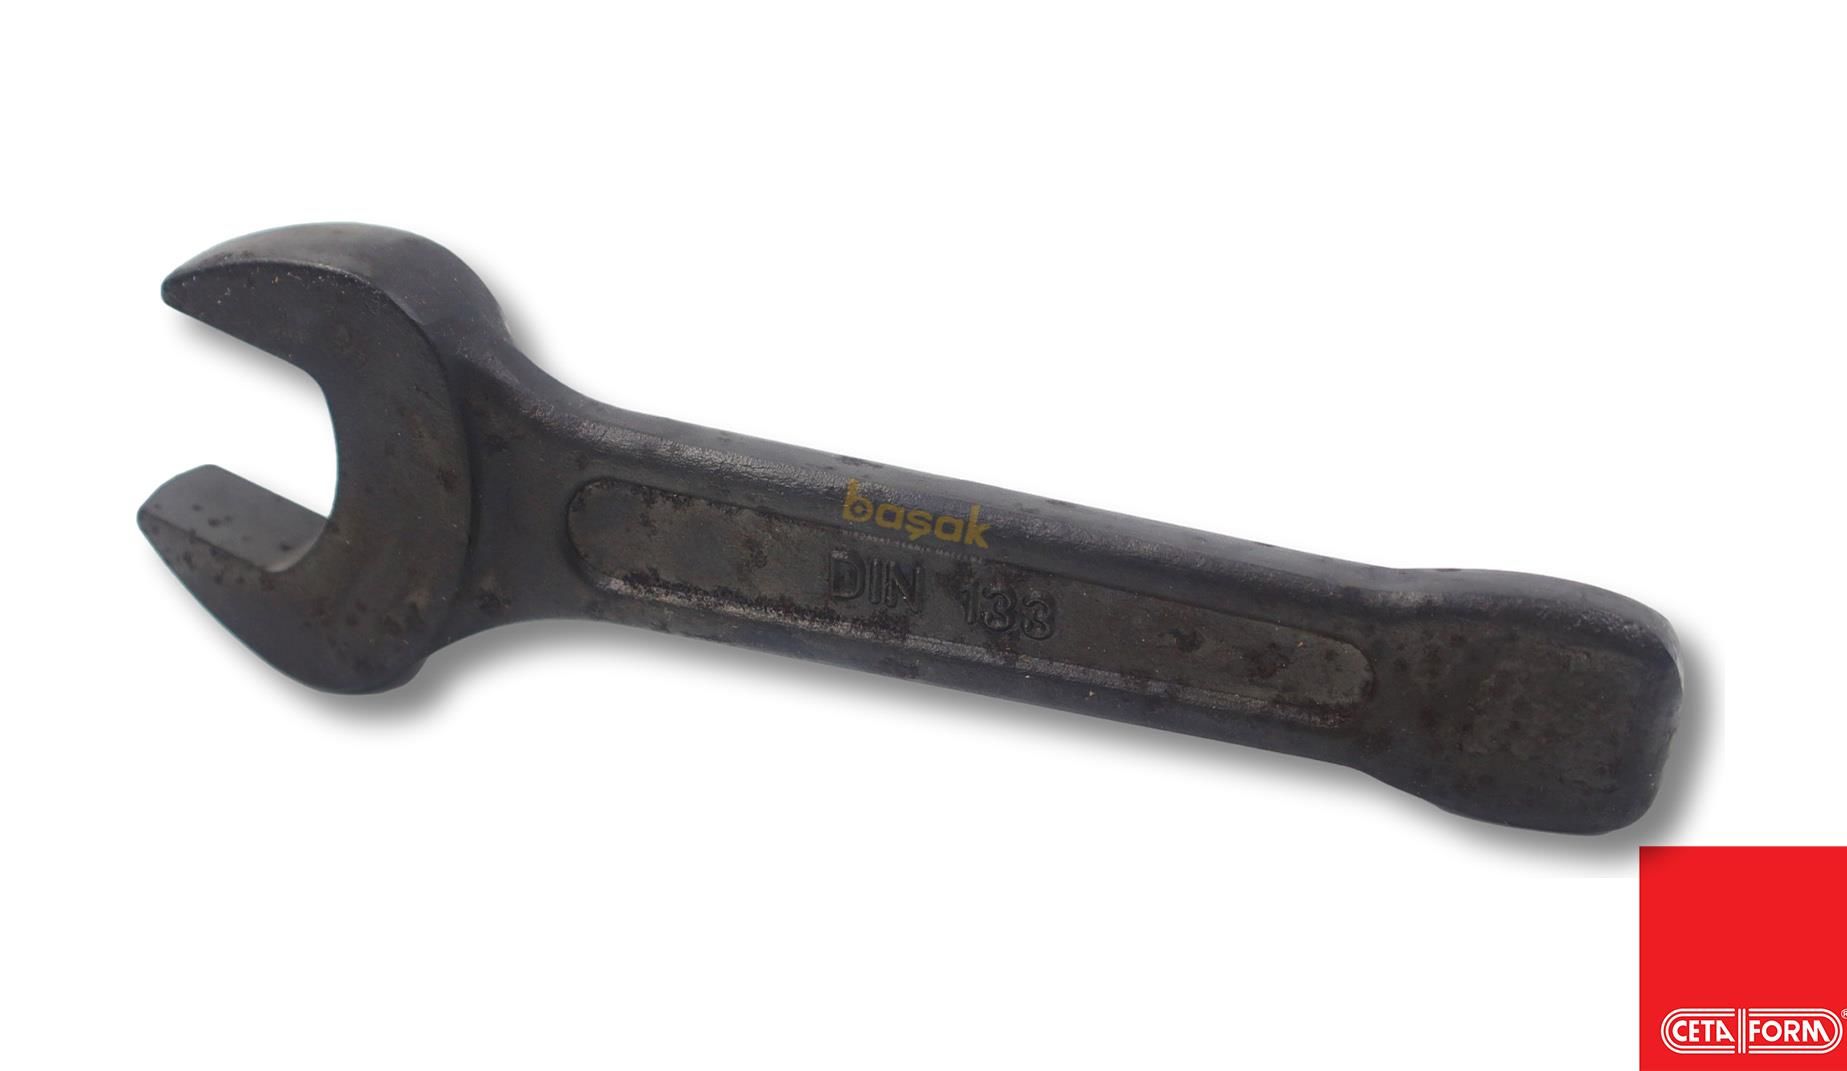 Ceta Form 32 mm Açık Ağız Darbeli (Çakma) Anahtar B23-32